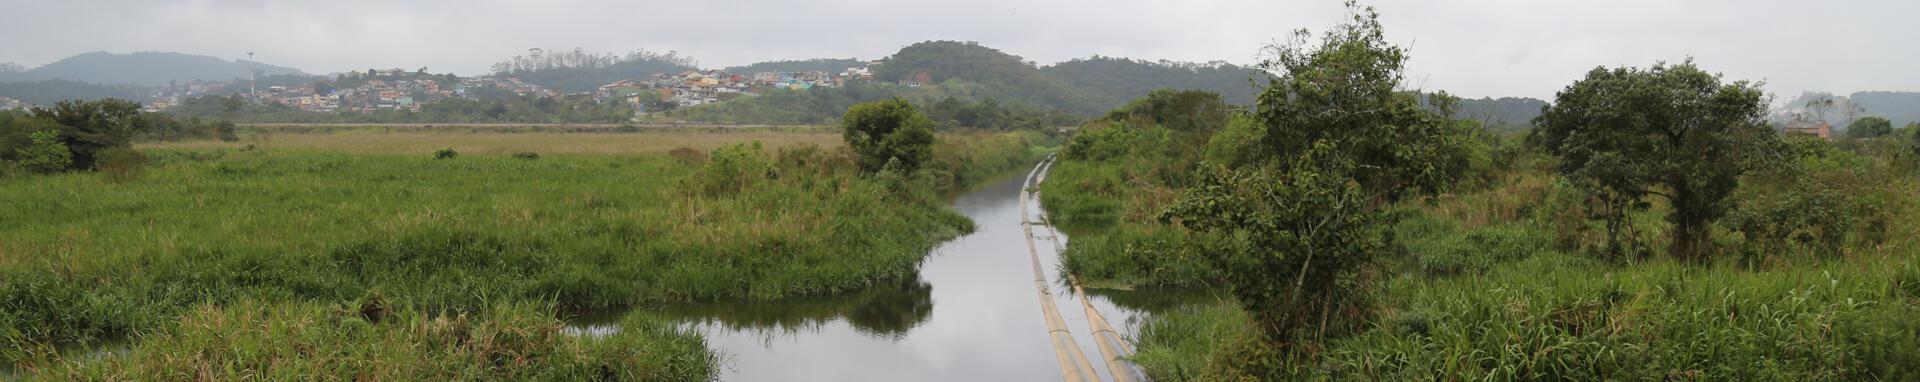 World Bank Latin America and the Caribbean Landscape with the Alto Tietê water system. São Paulo, Brazil. Photo: Mariana Kaipper Ceratti/World Bank.